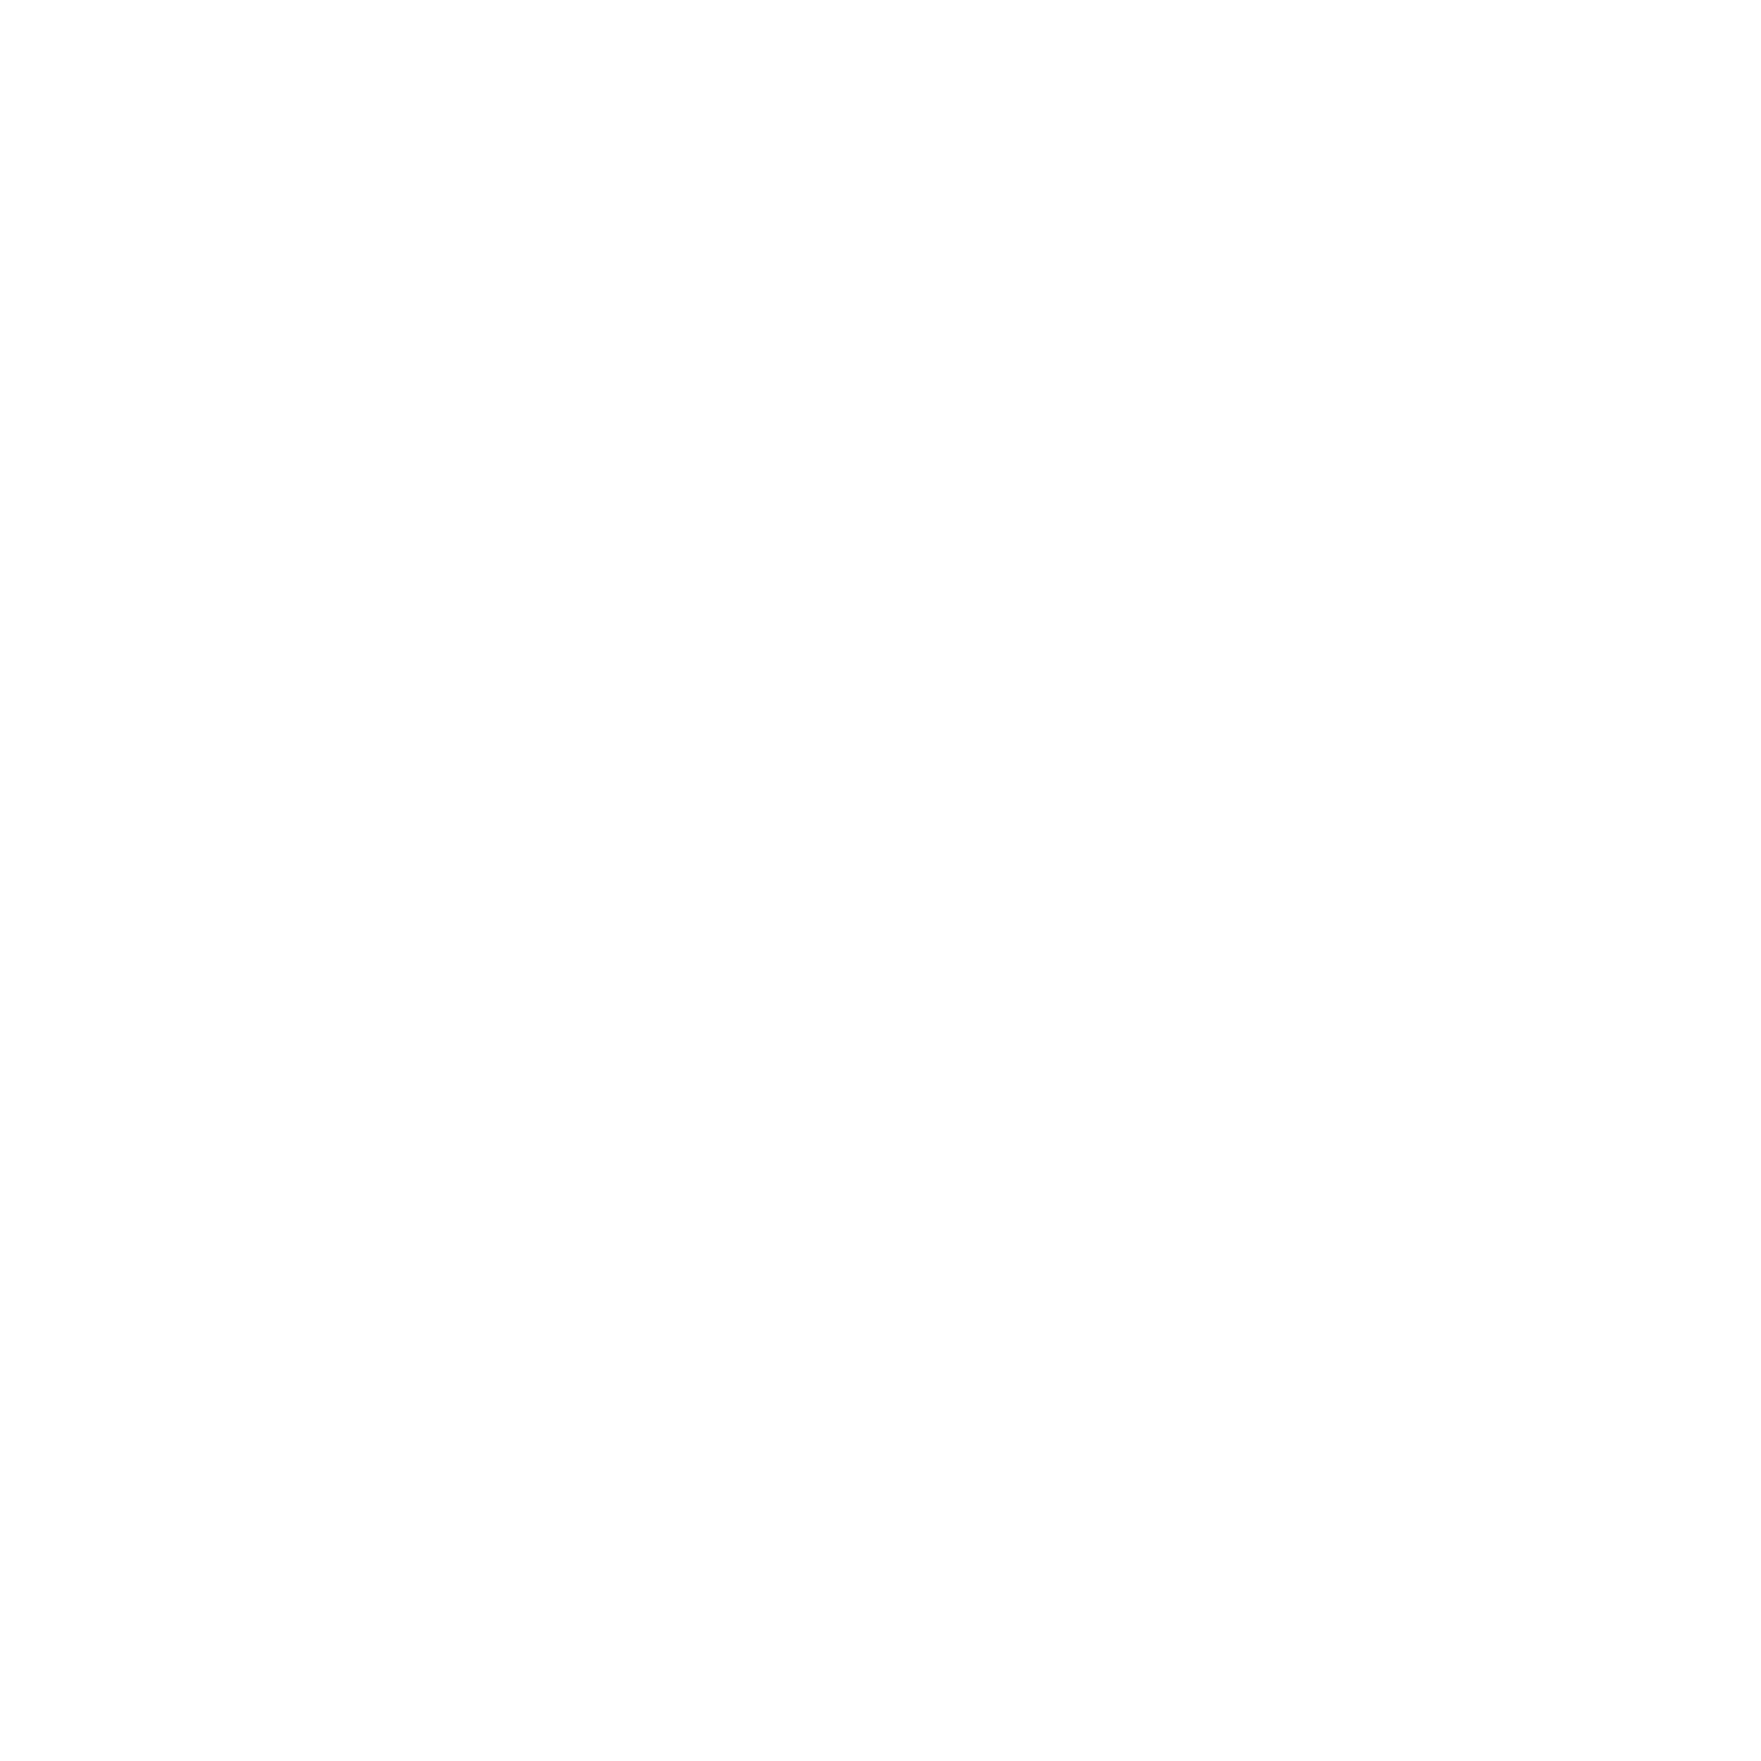 Street Markety